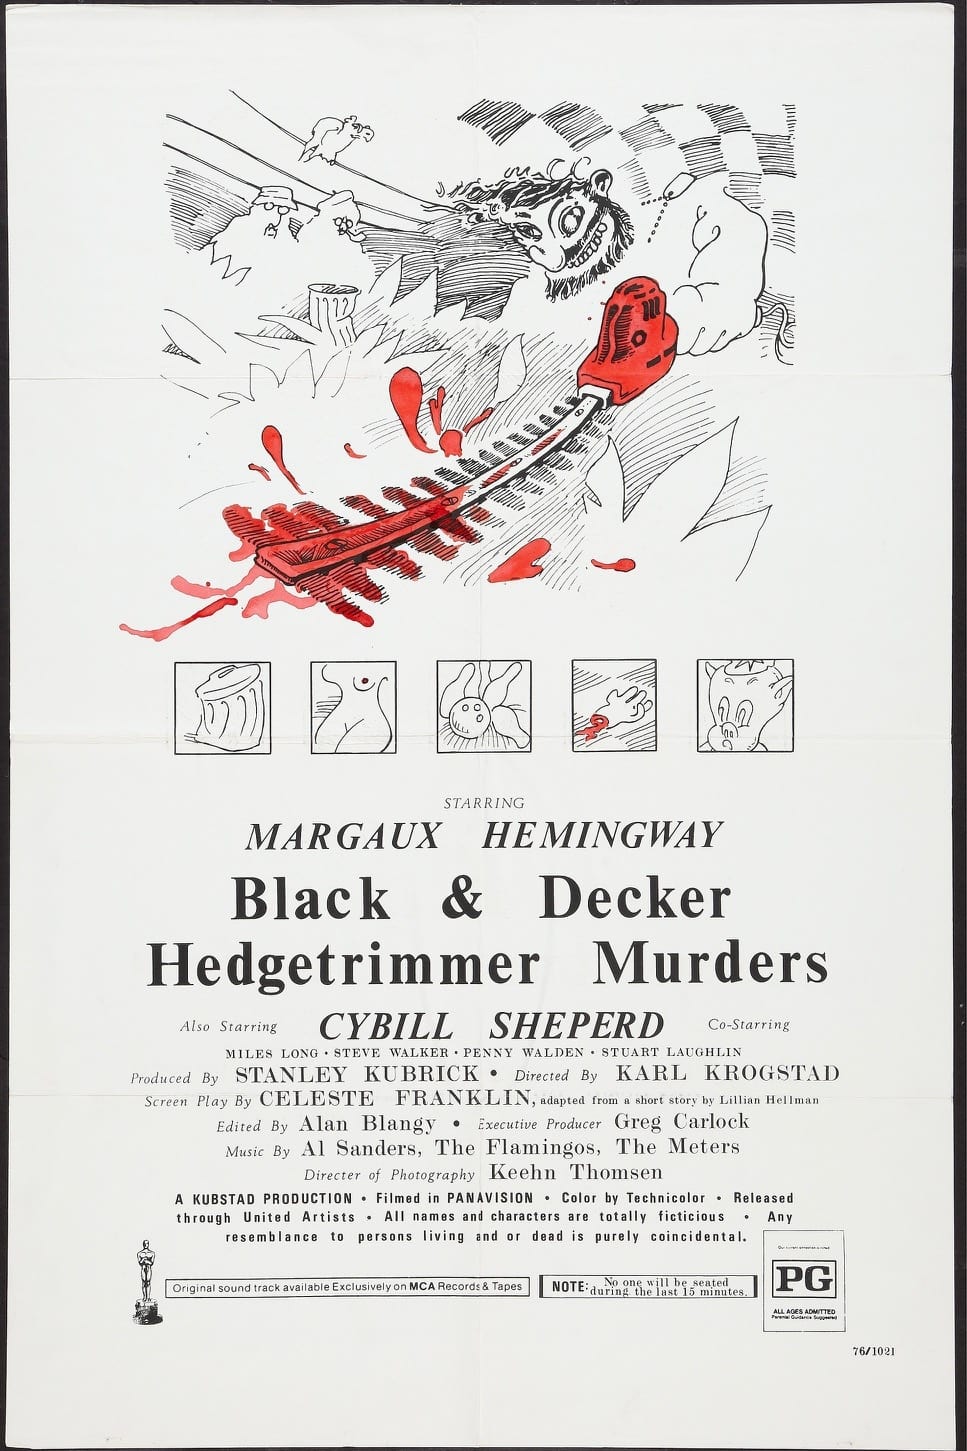 Black & Decker Hedgetrimmer Murders